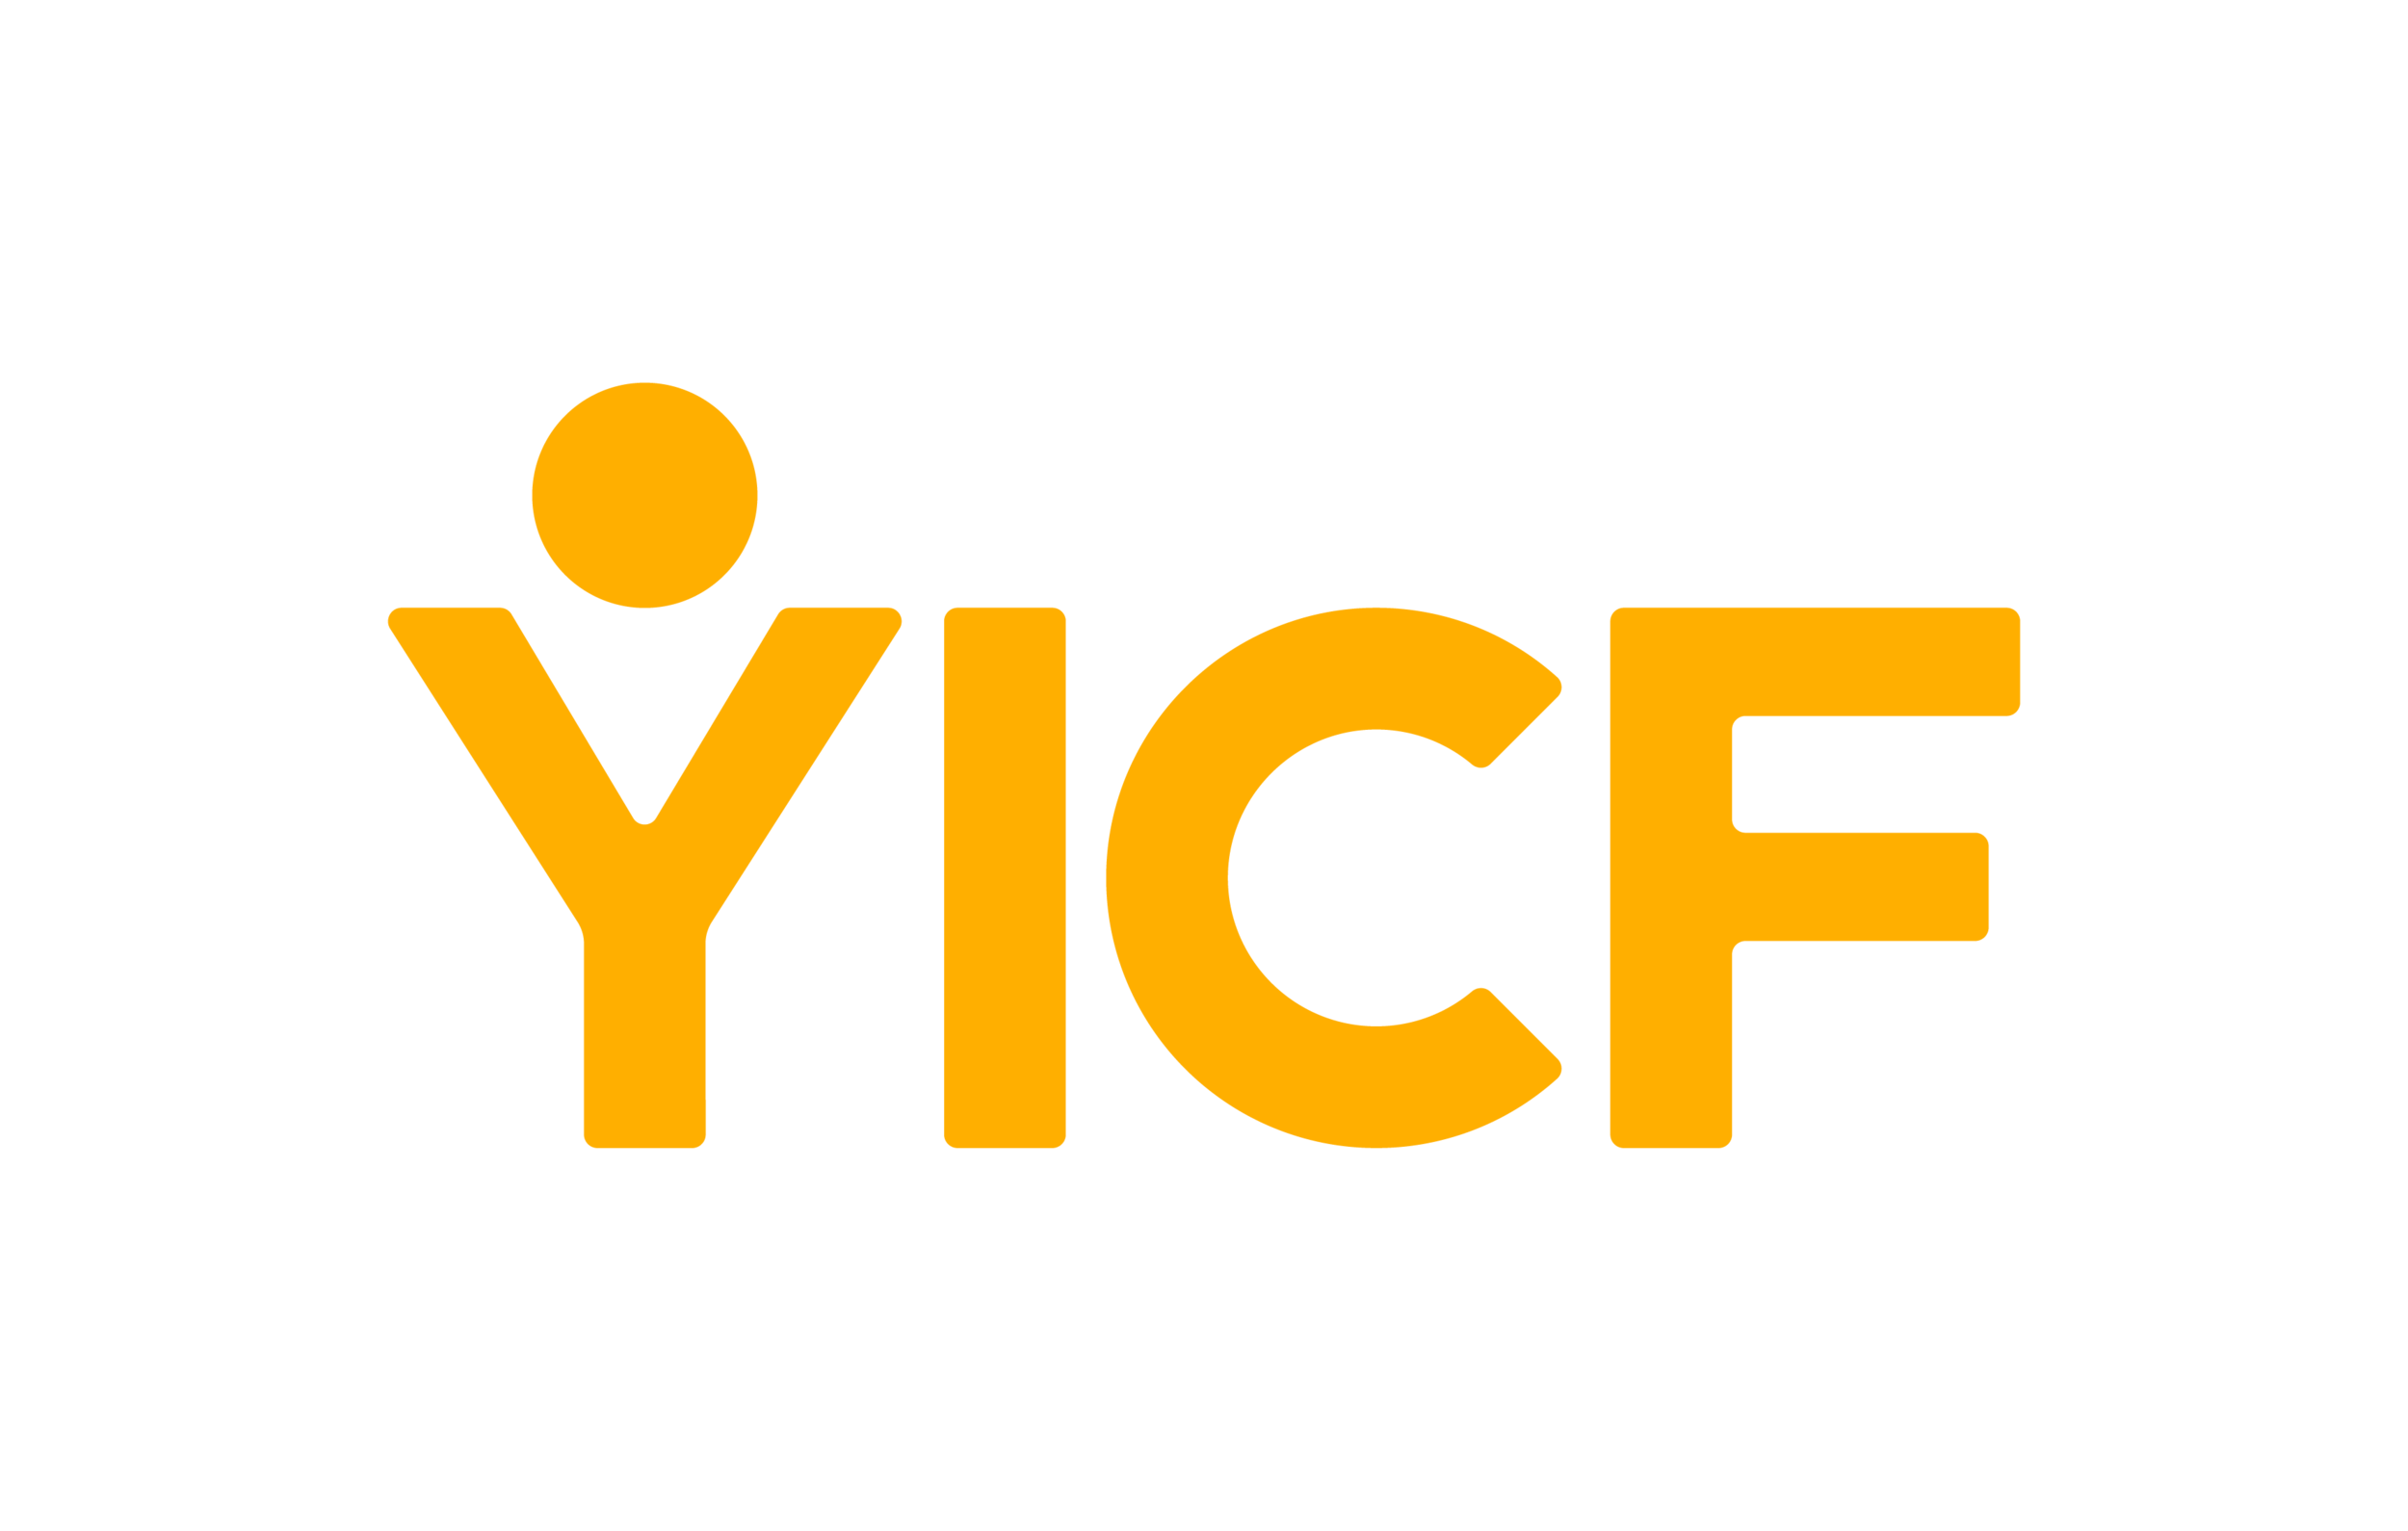 YICF - Yayasan Internasional Cahaya Fajar (Light of Dawn International)